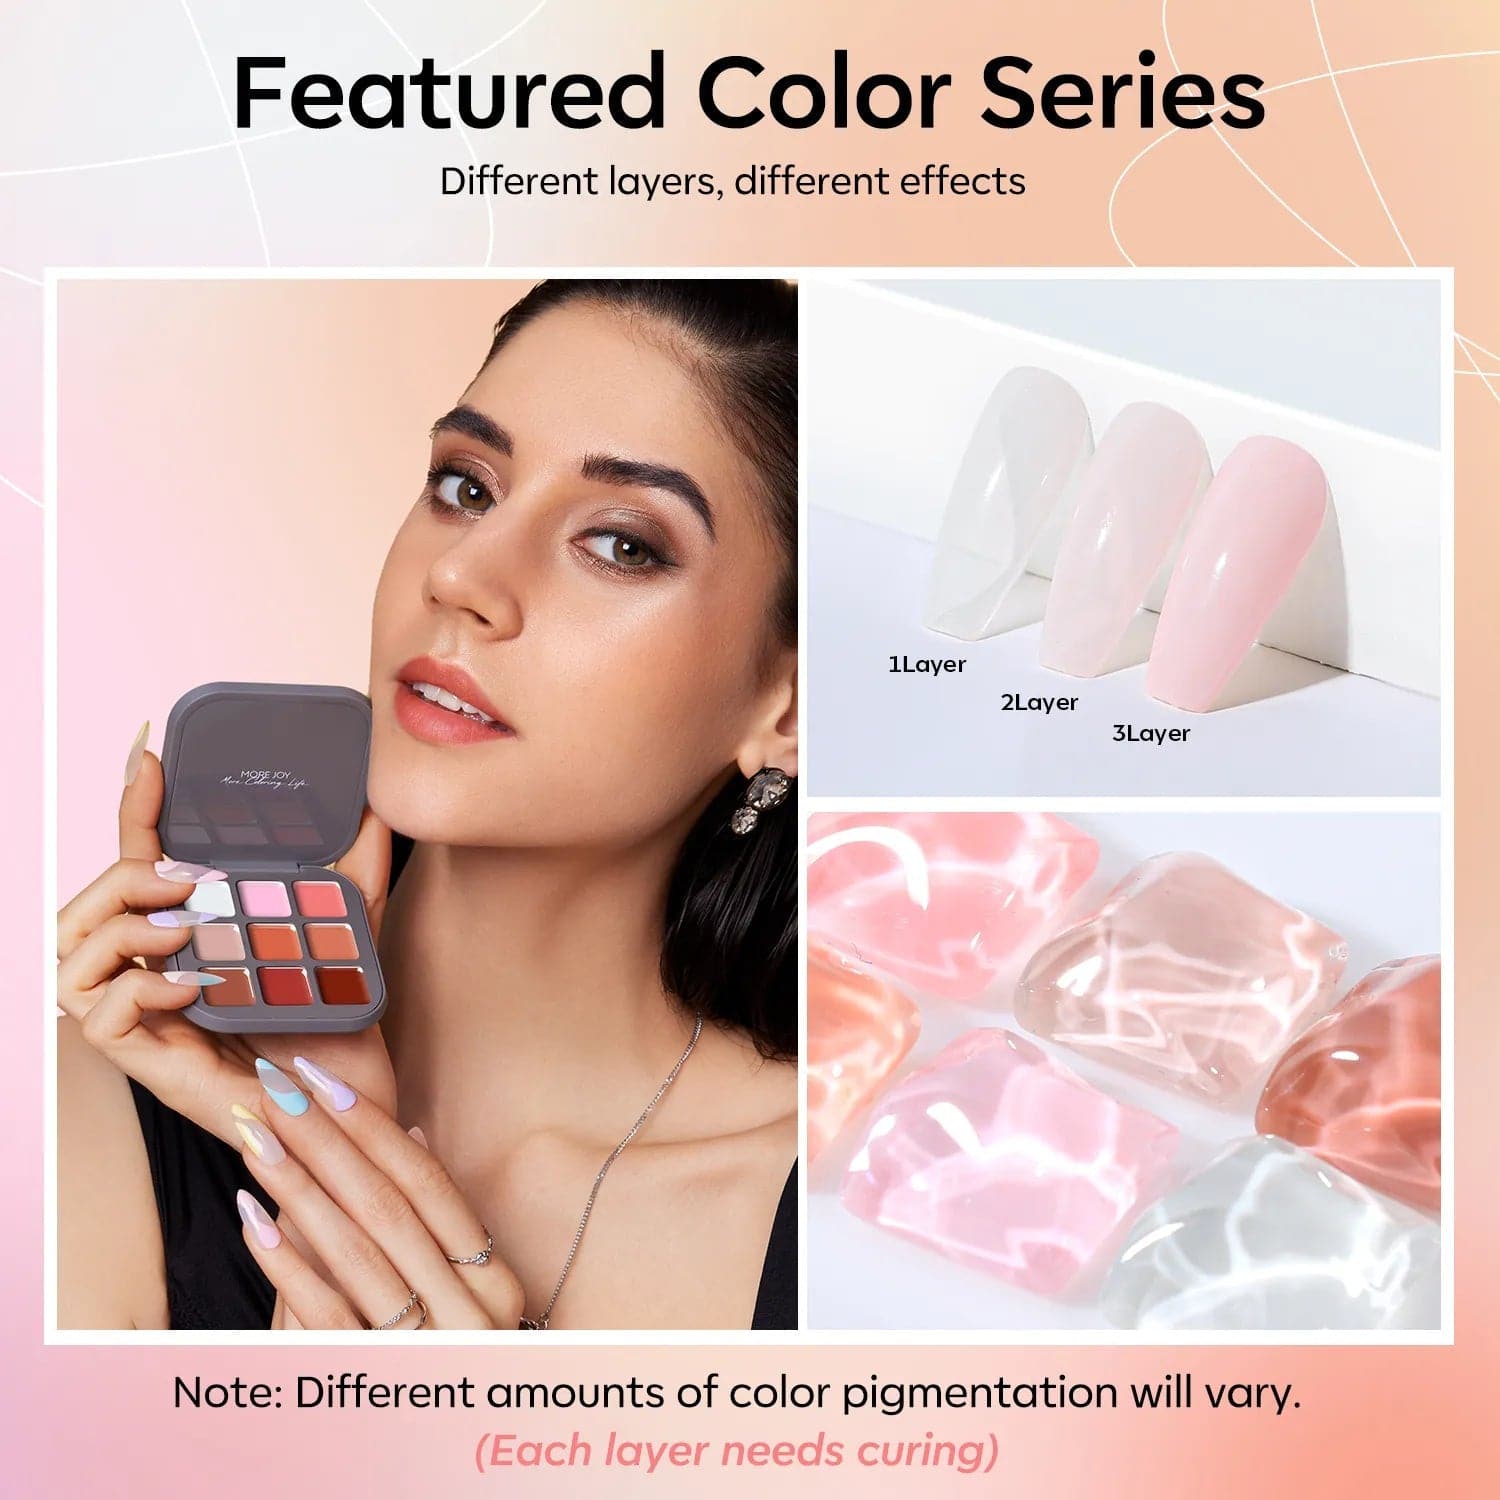 Lovesick - 9 Shades Solid Cream Gel Polish Color Cube - MODELONES.com